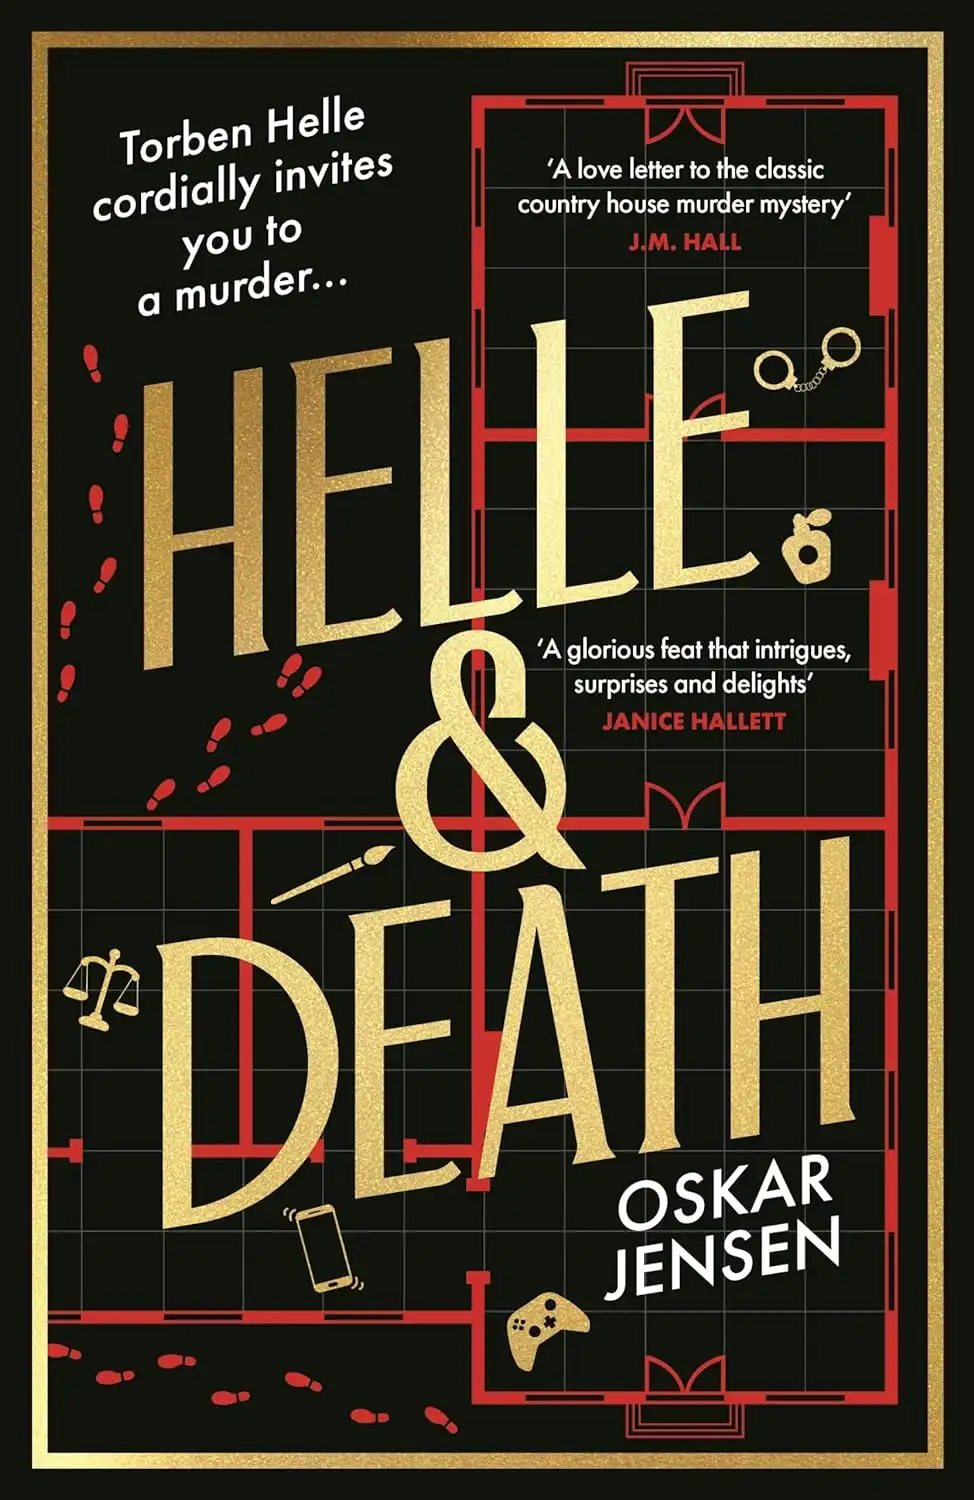 Helle and Death by Oskar Jensen